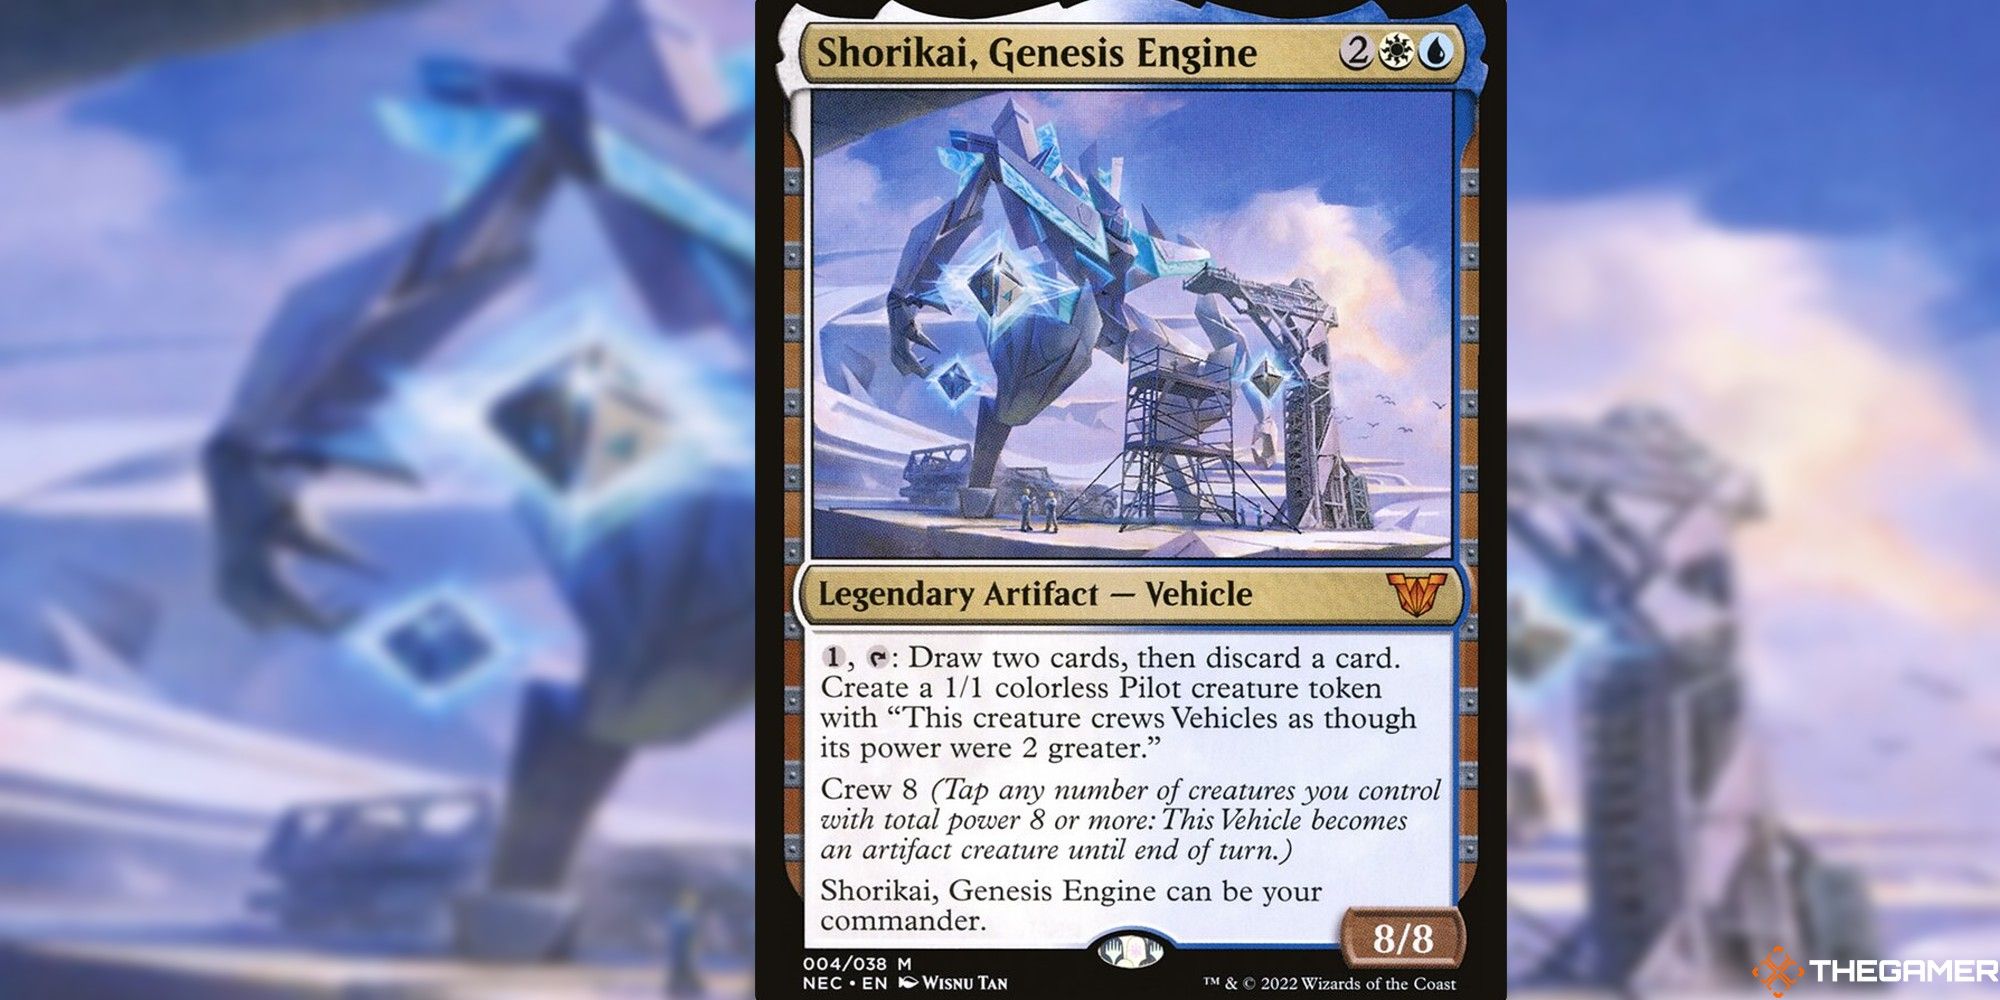 mtg shorikai, genesis engine full card and art background